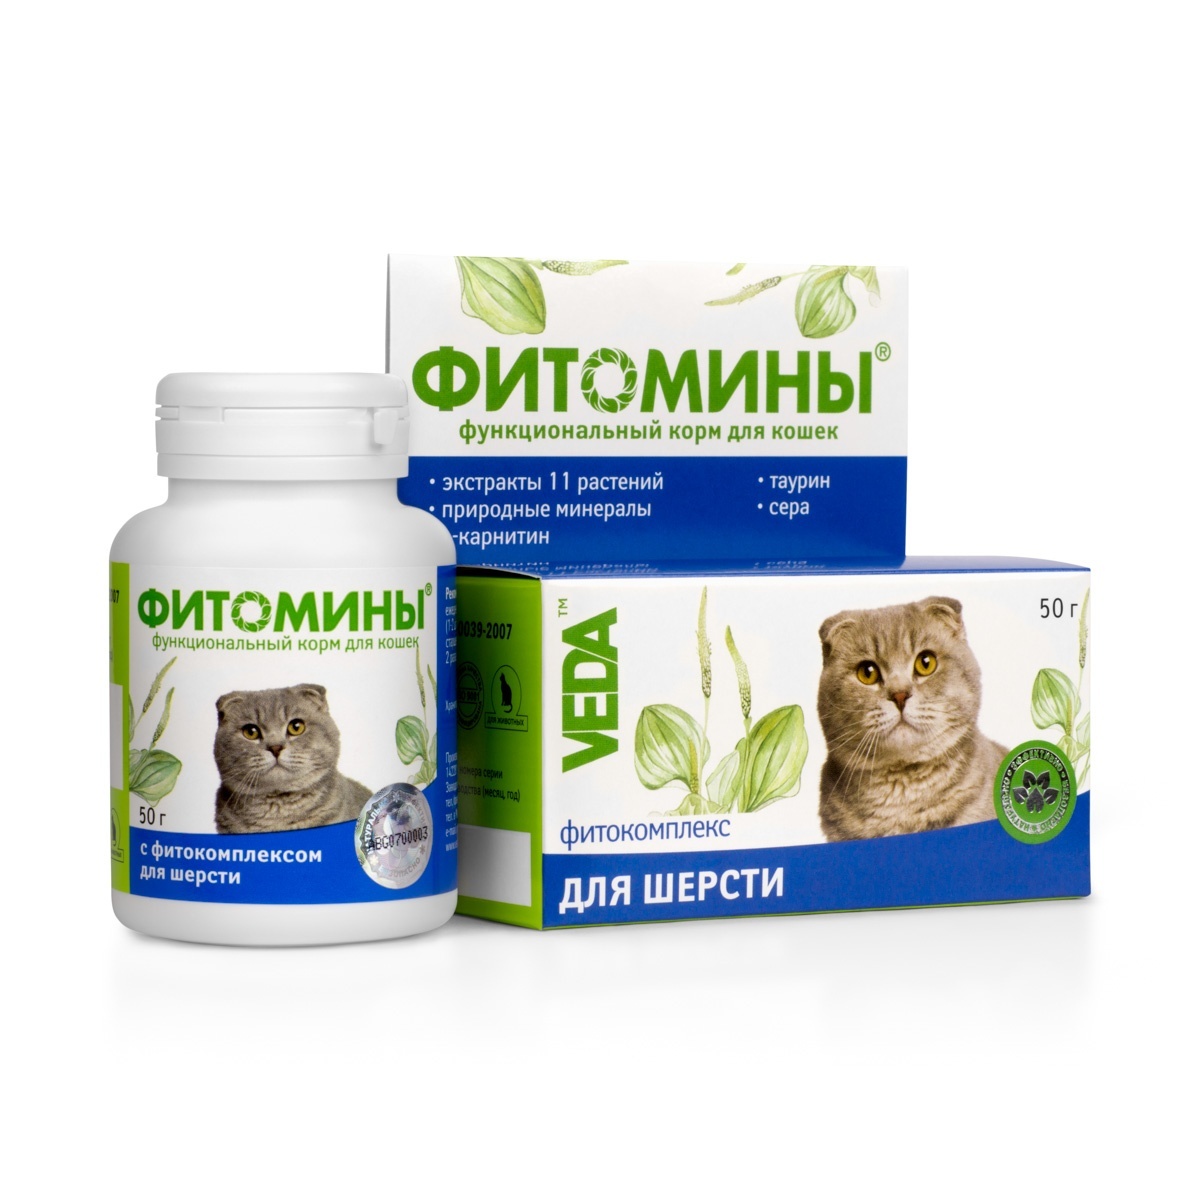 Веда Веда фитомины для шерсти кошек, 100 таб. (50 г)